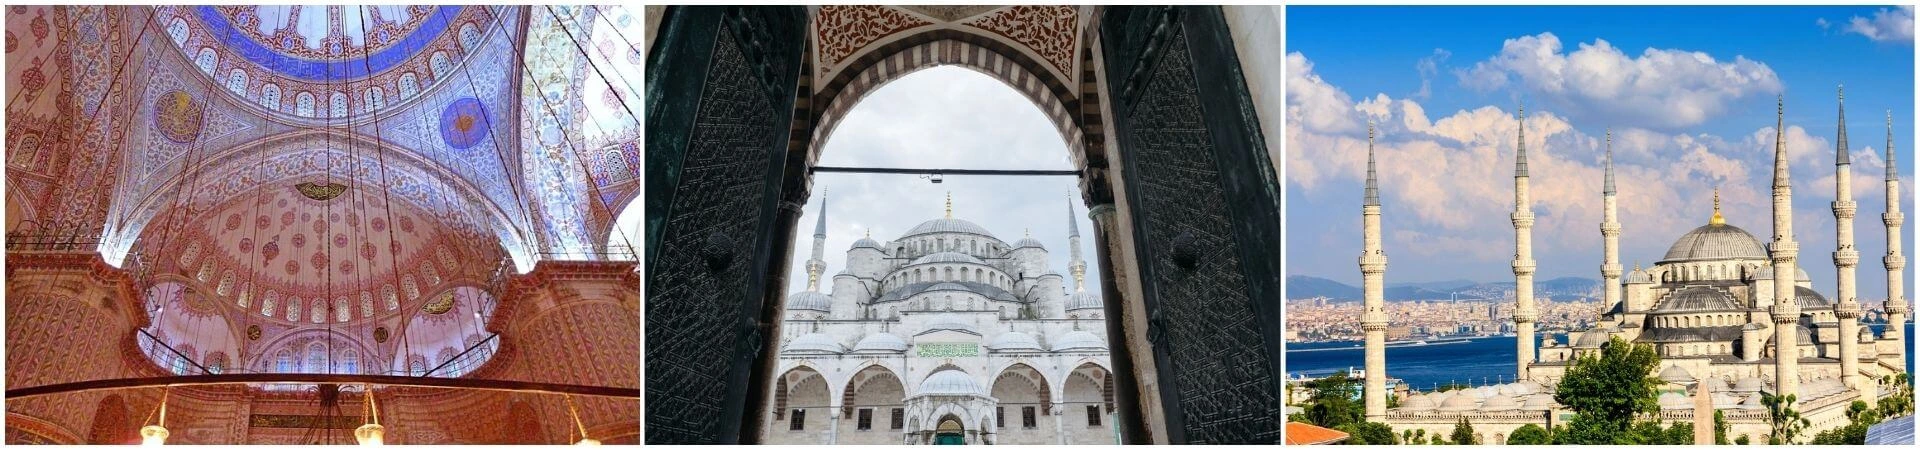 Obilazak Plave džamije u Istanbulu